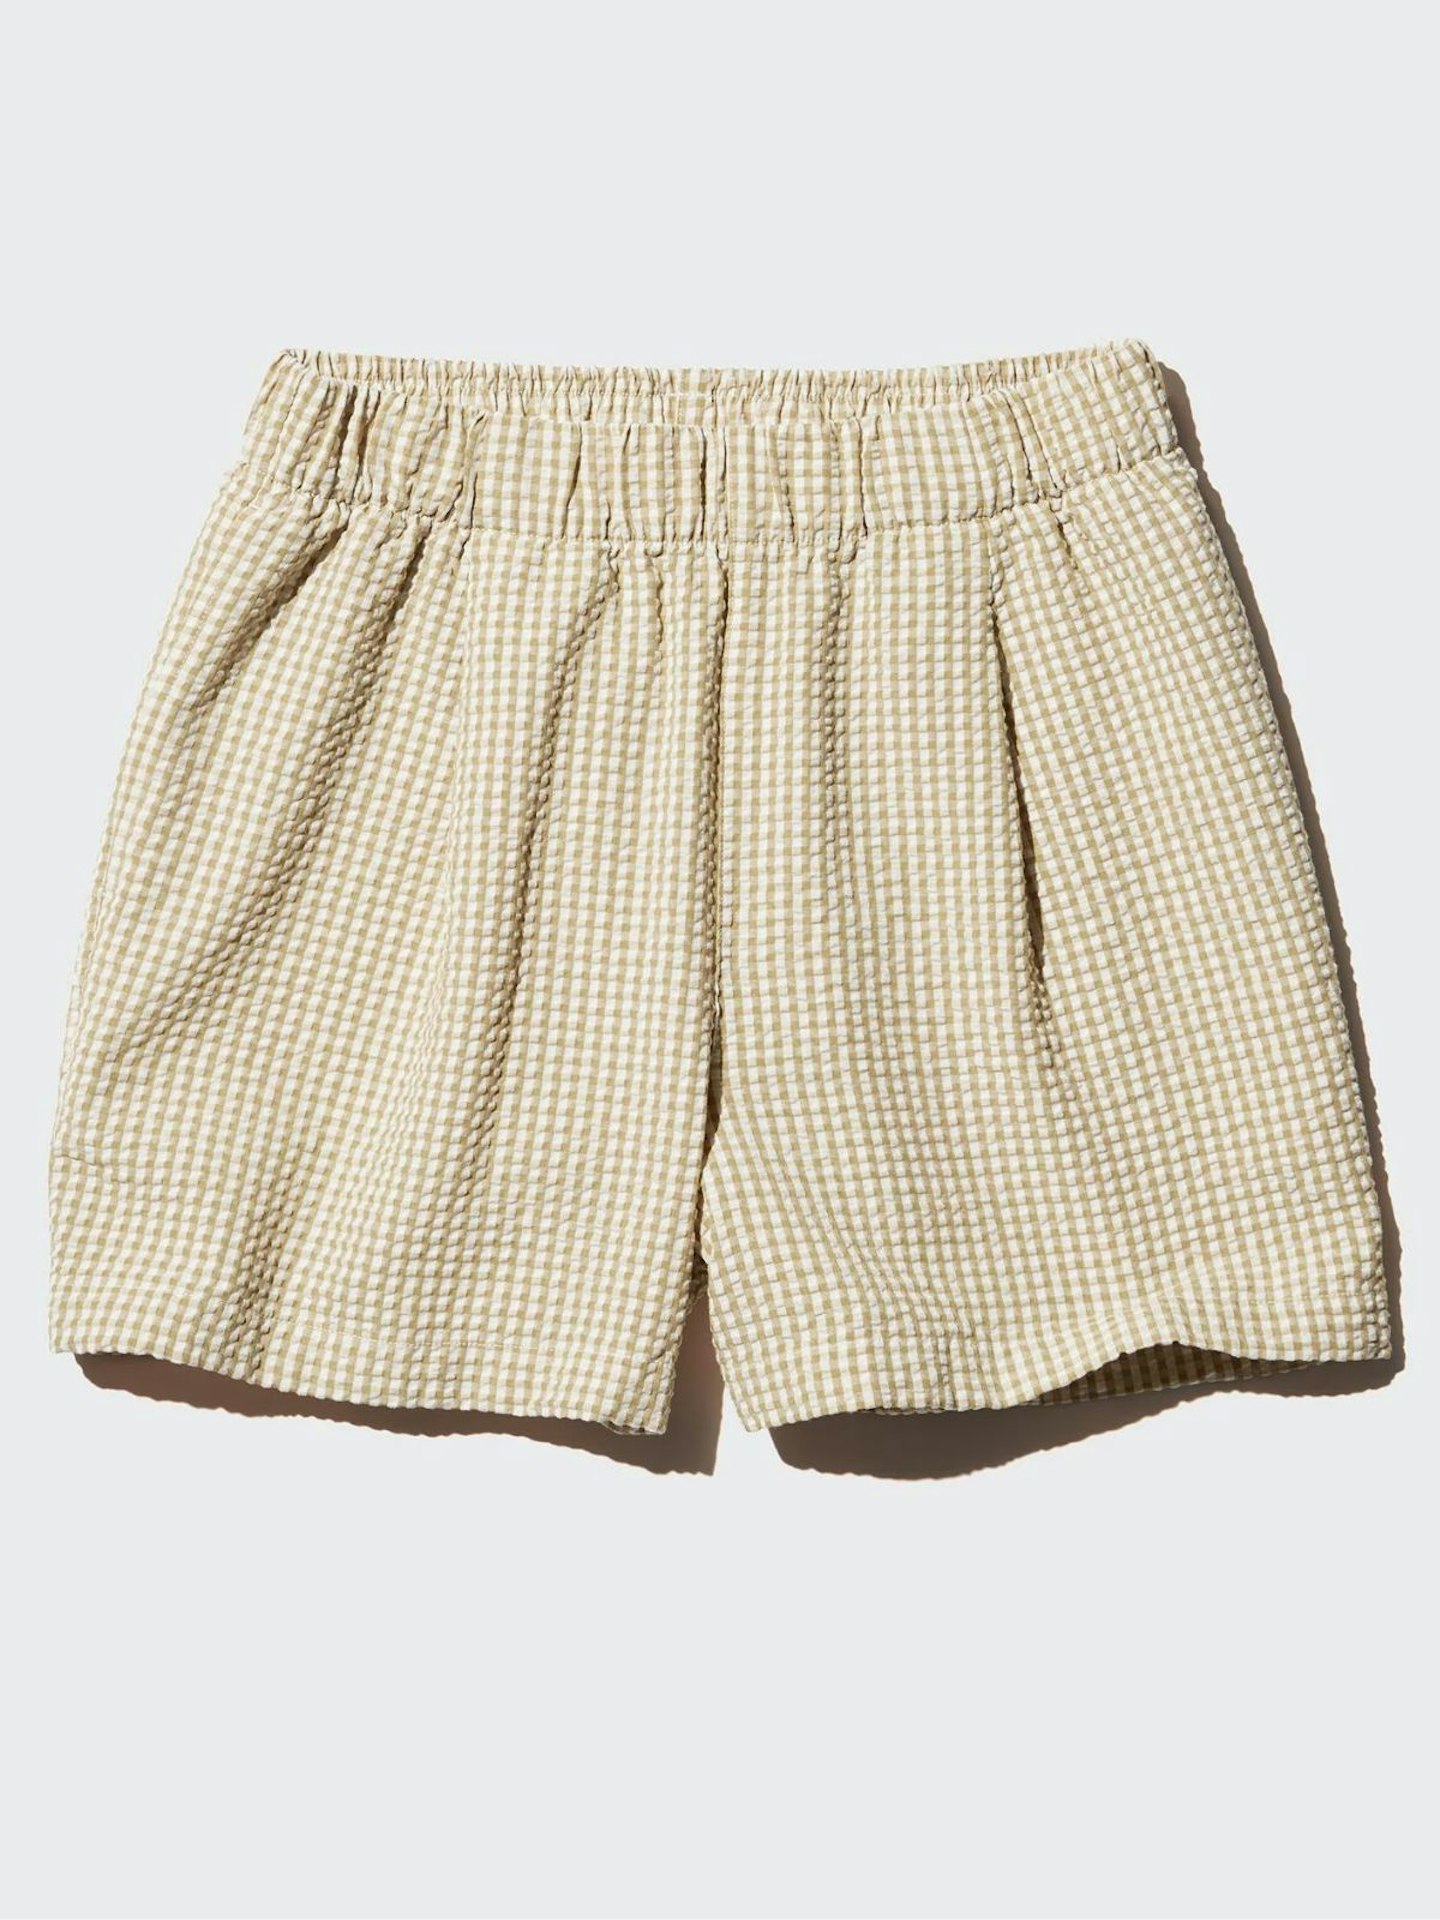 Uniqlo Seersucker Cotton Gingham Checked Easy Shorts